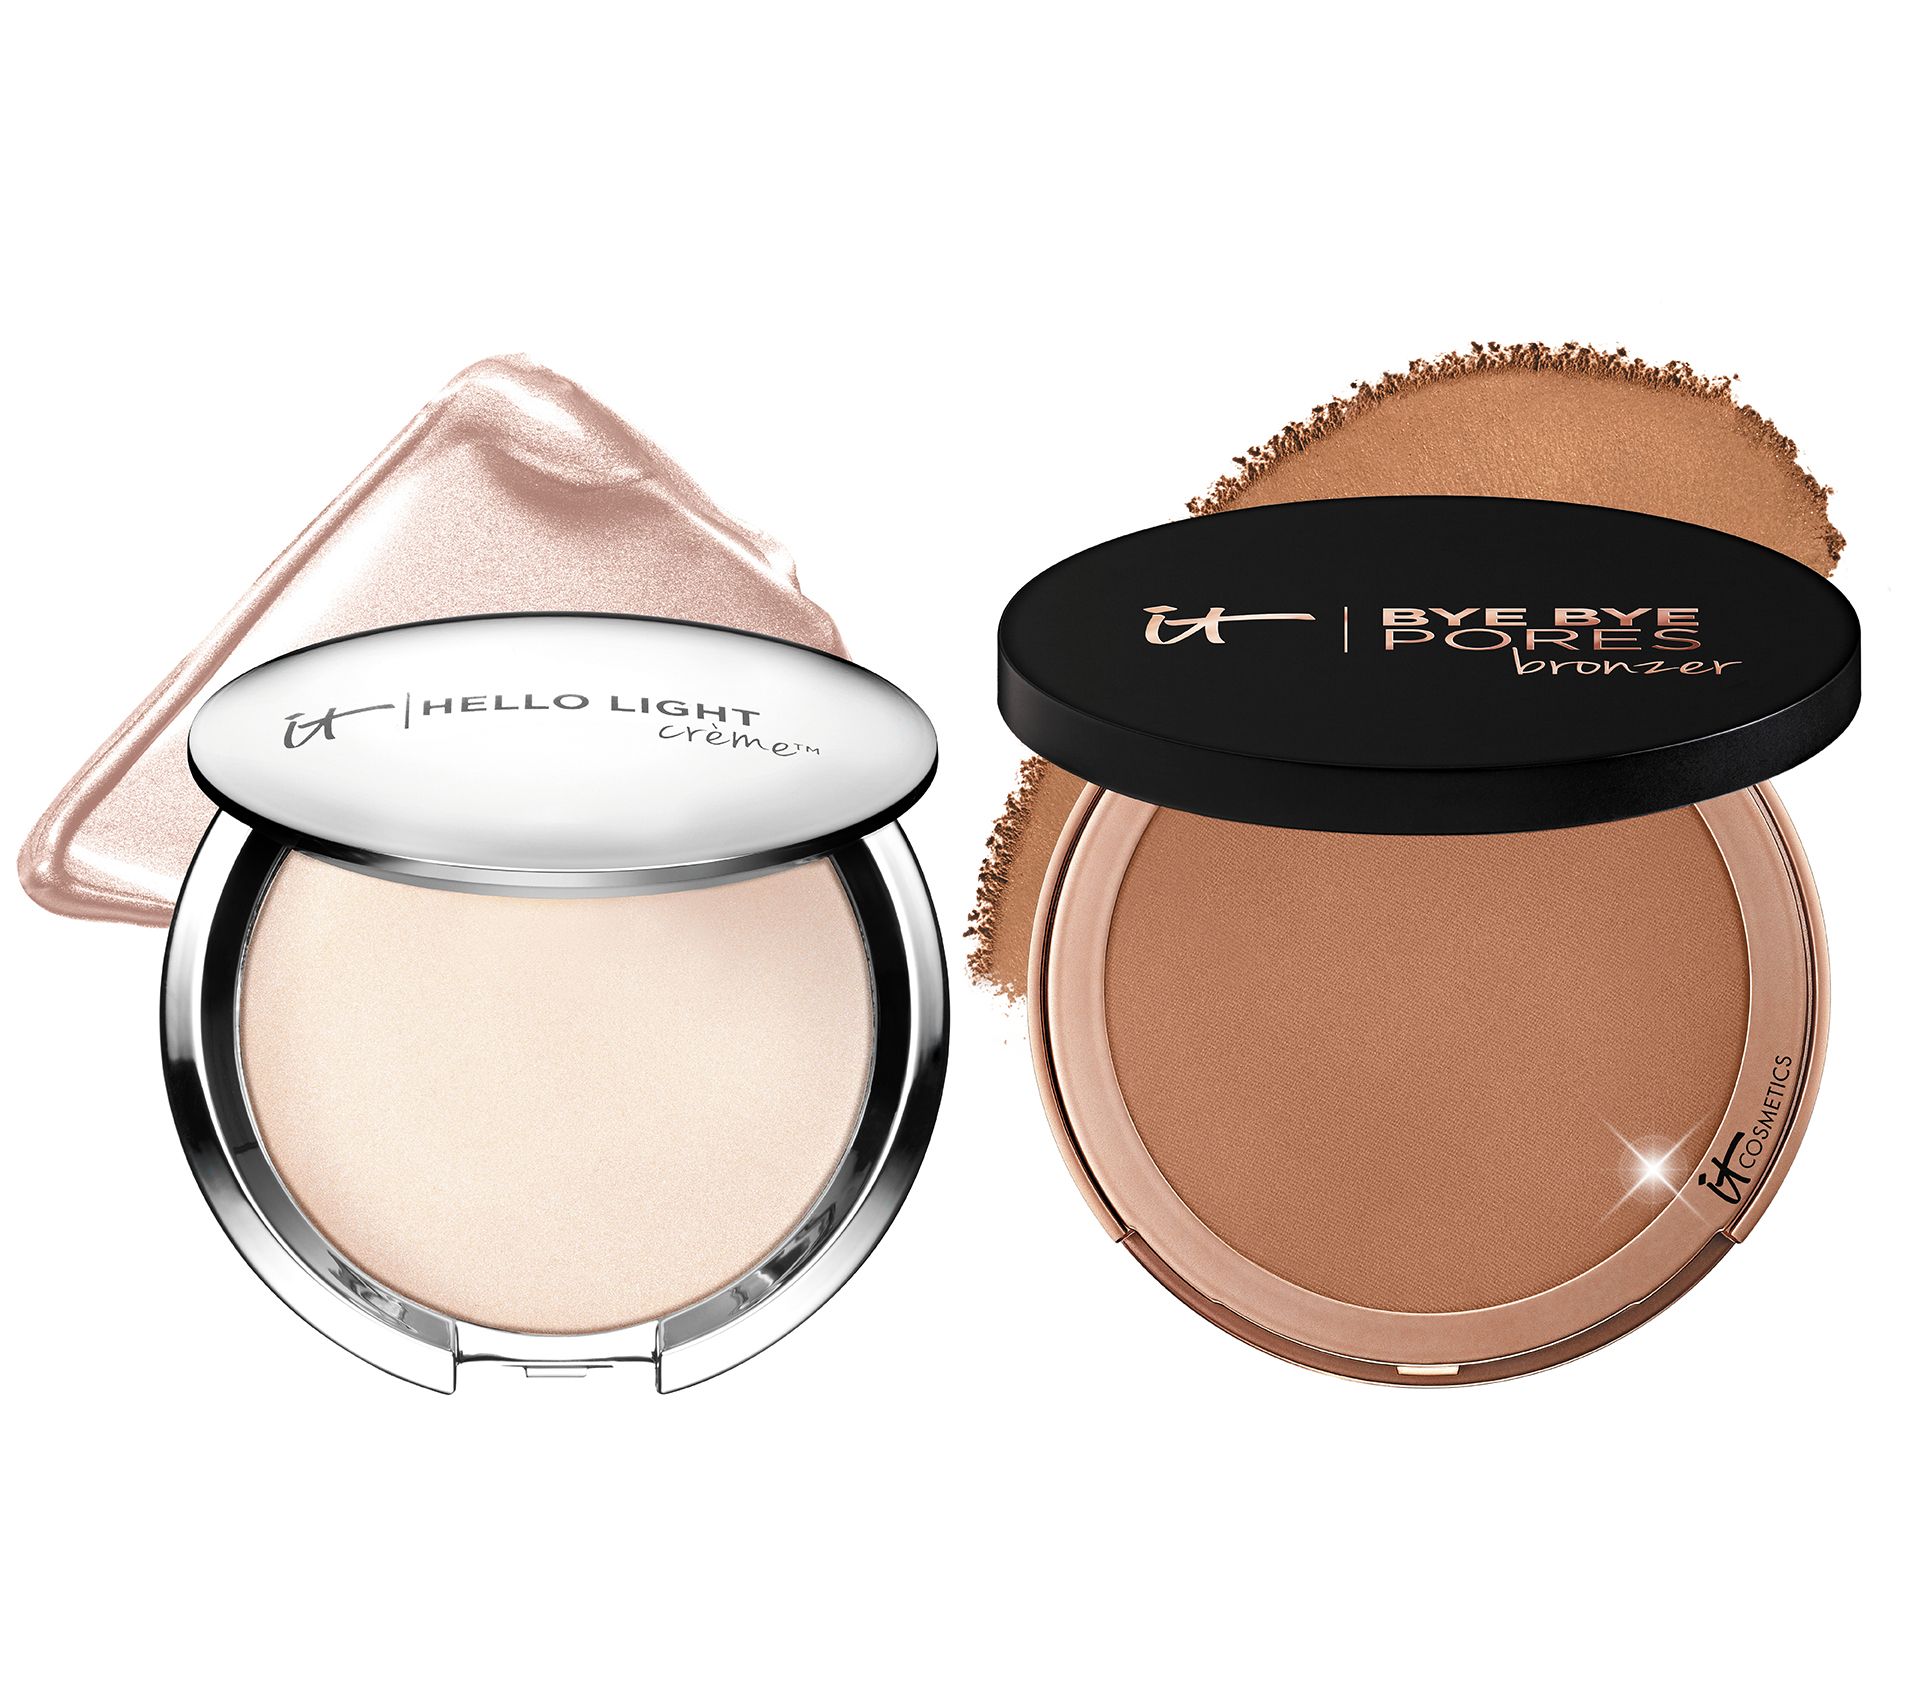 IT Cosmetics Bye Bye Pores Bronzer & Hello Light Highlighter Set - QVC.com